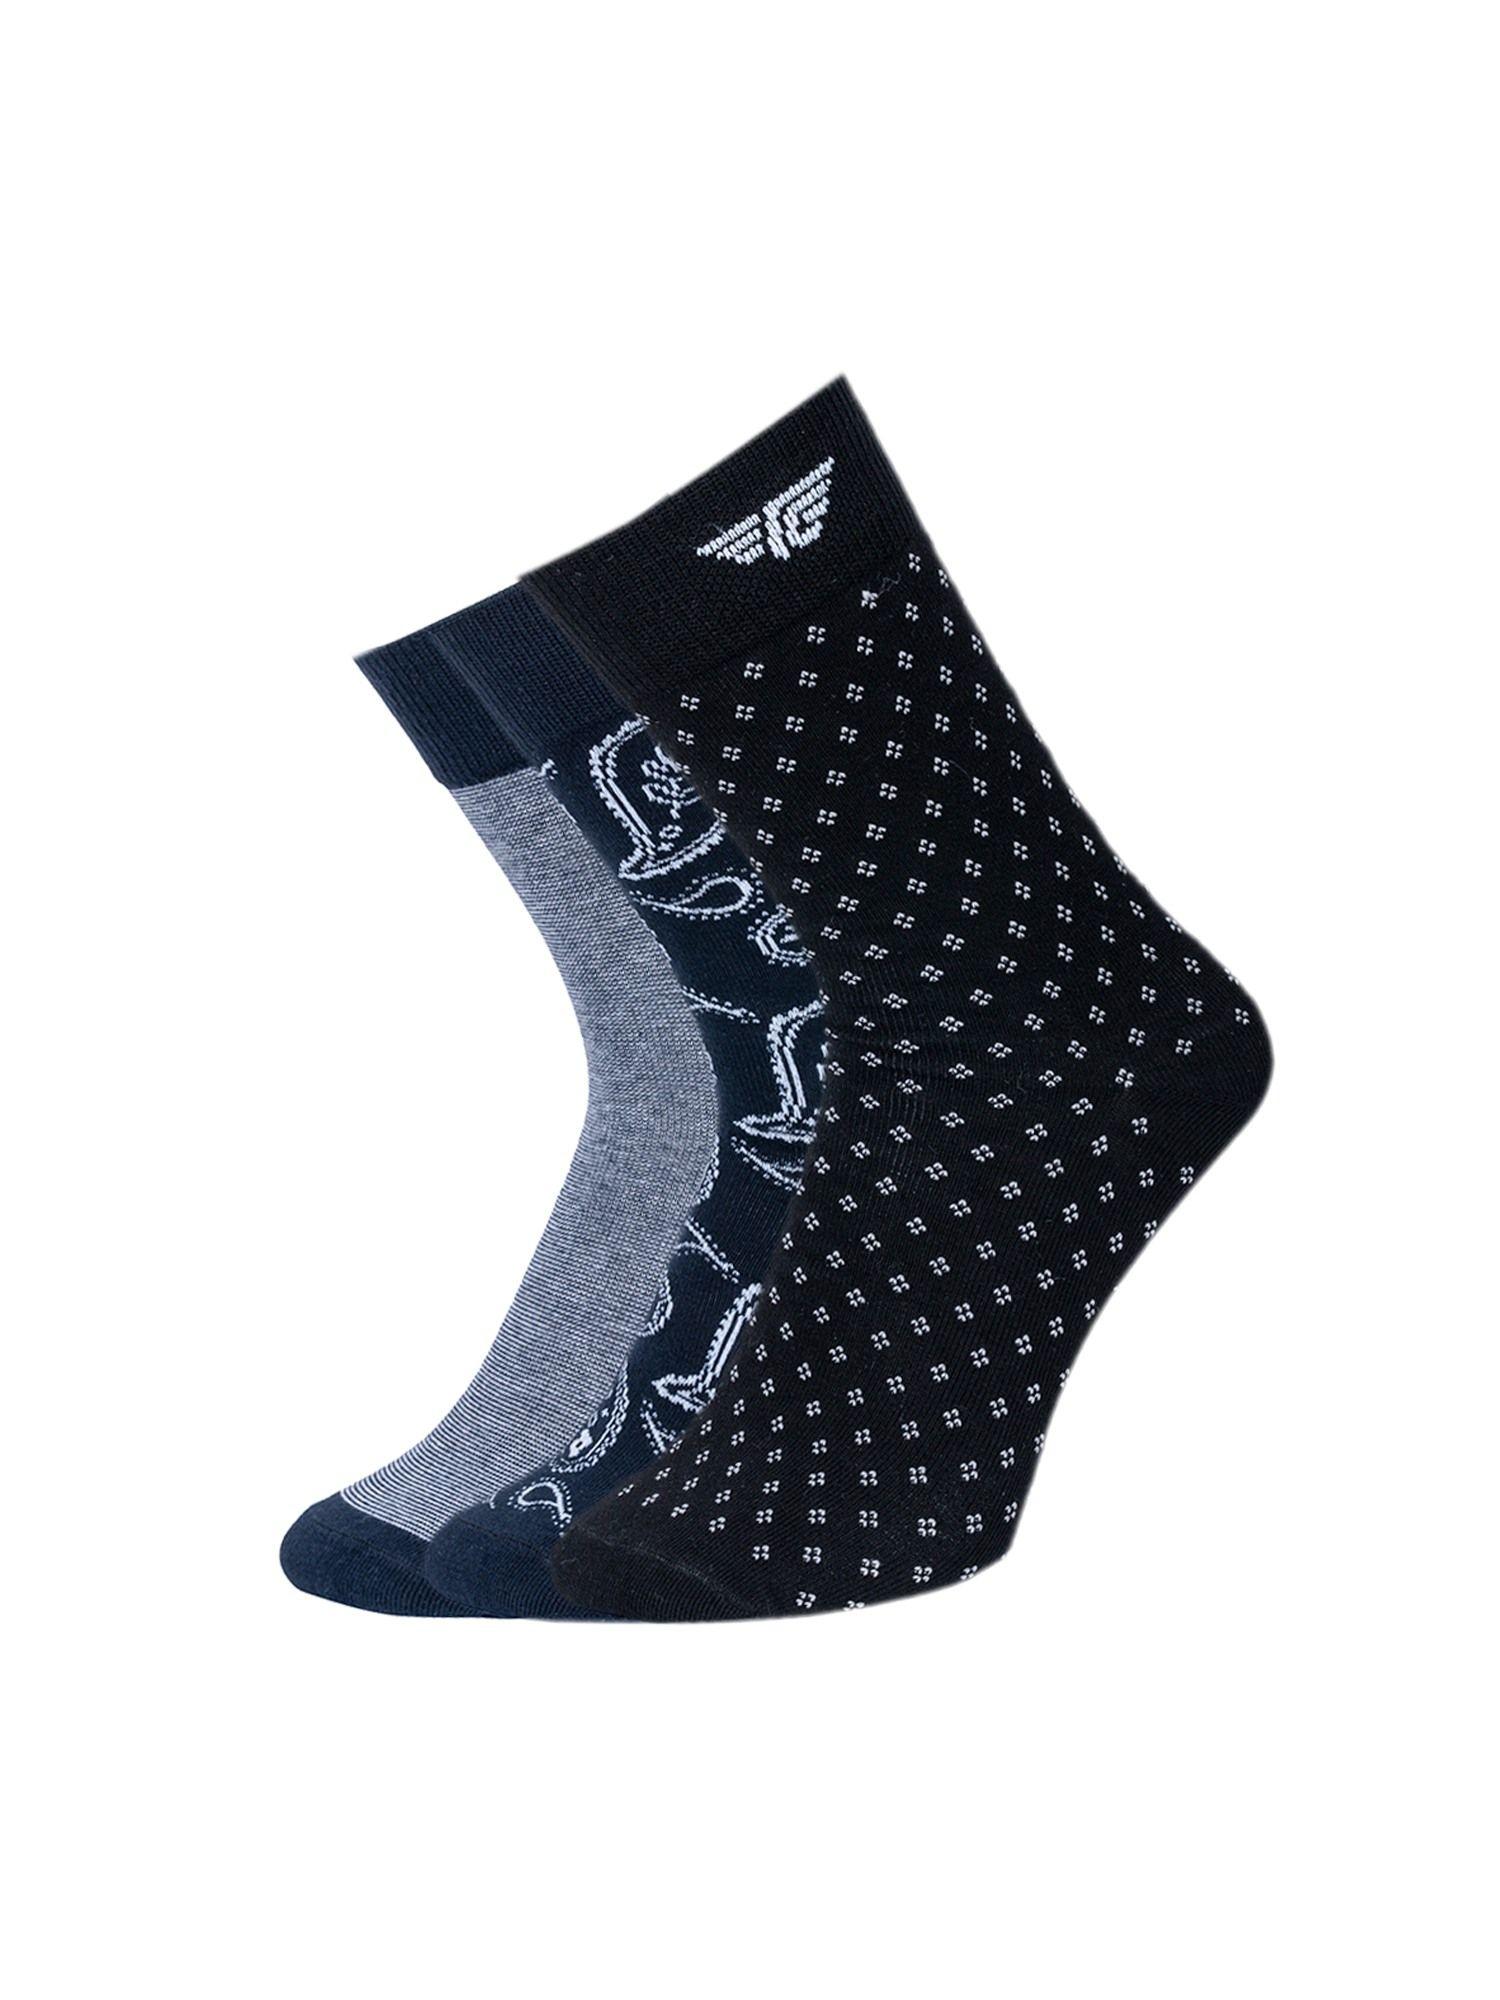 men-multi-color-jacquard-above-ankle-socks-(pack-of-3)